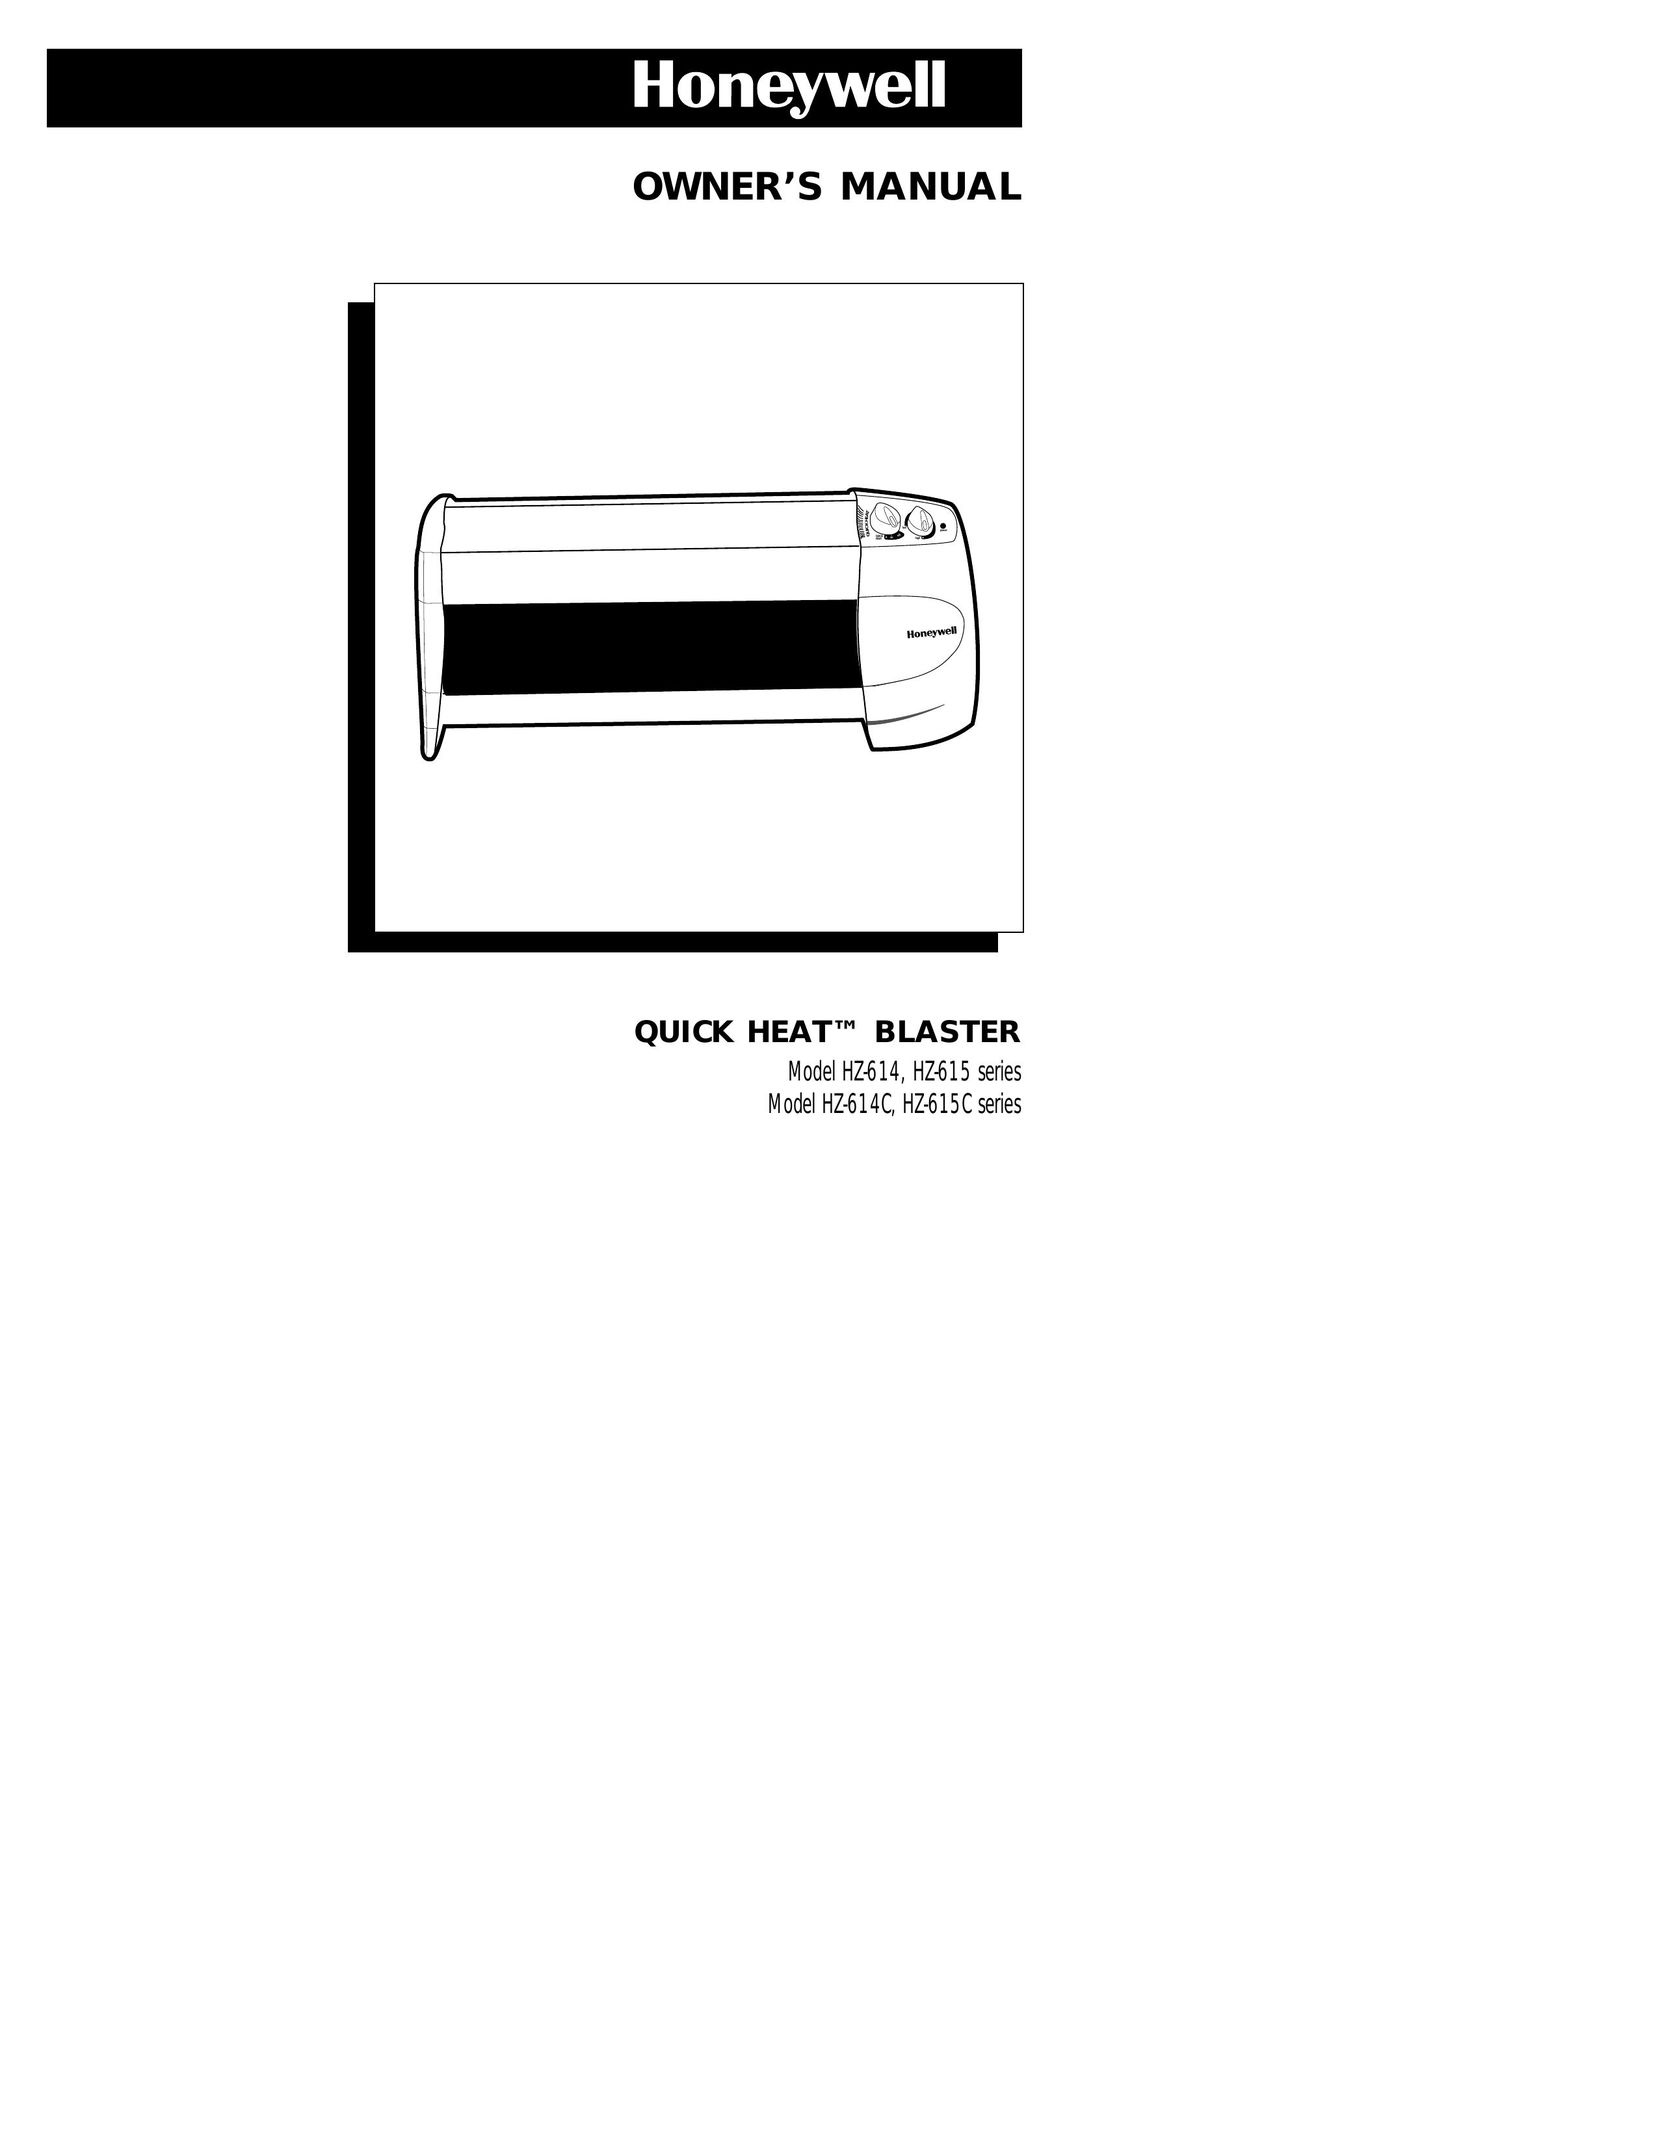 Honeywell HZ-615 Electric Heater User Manual